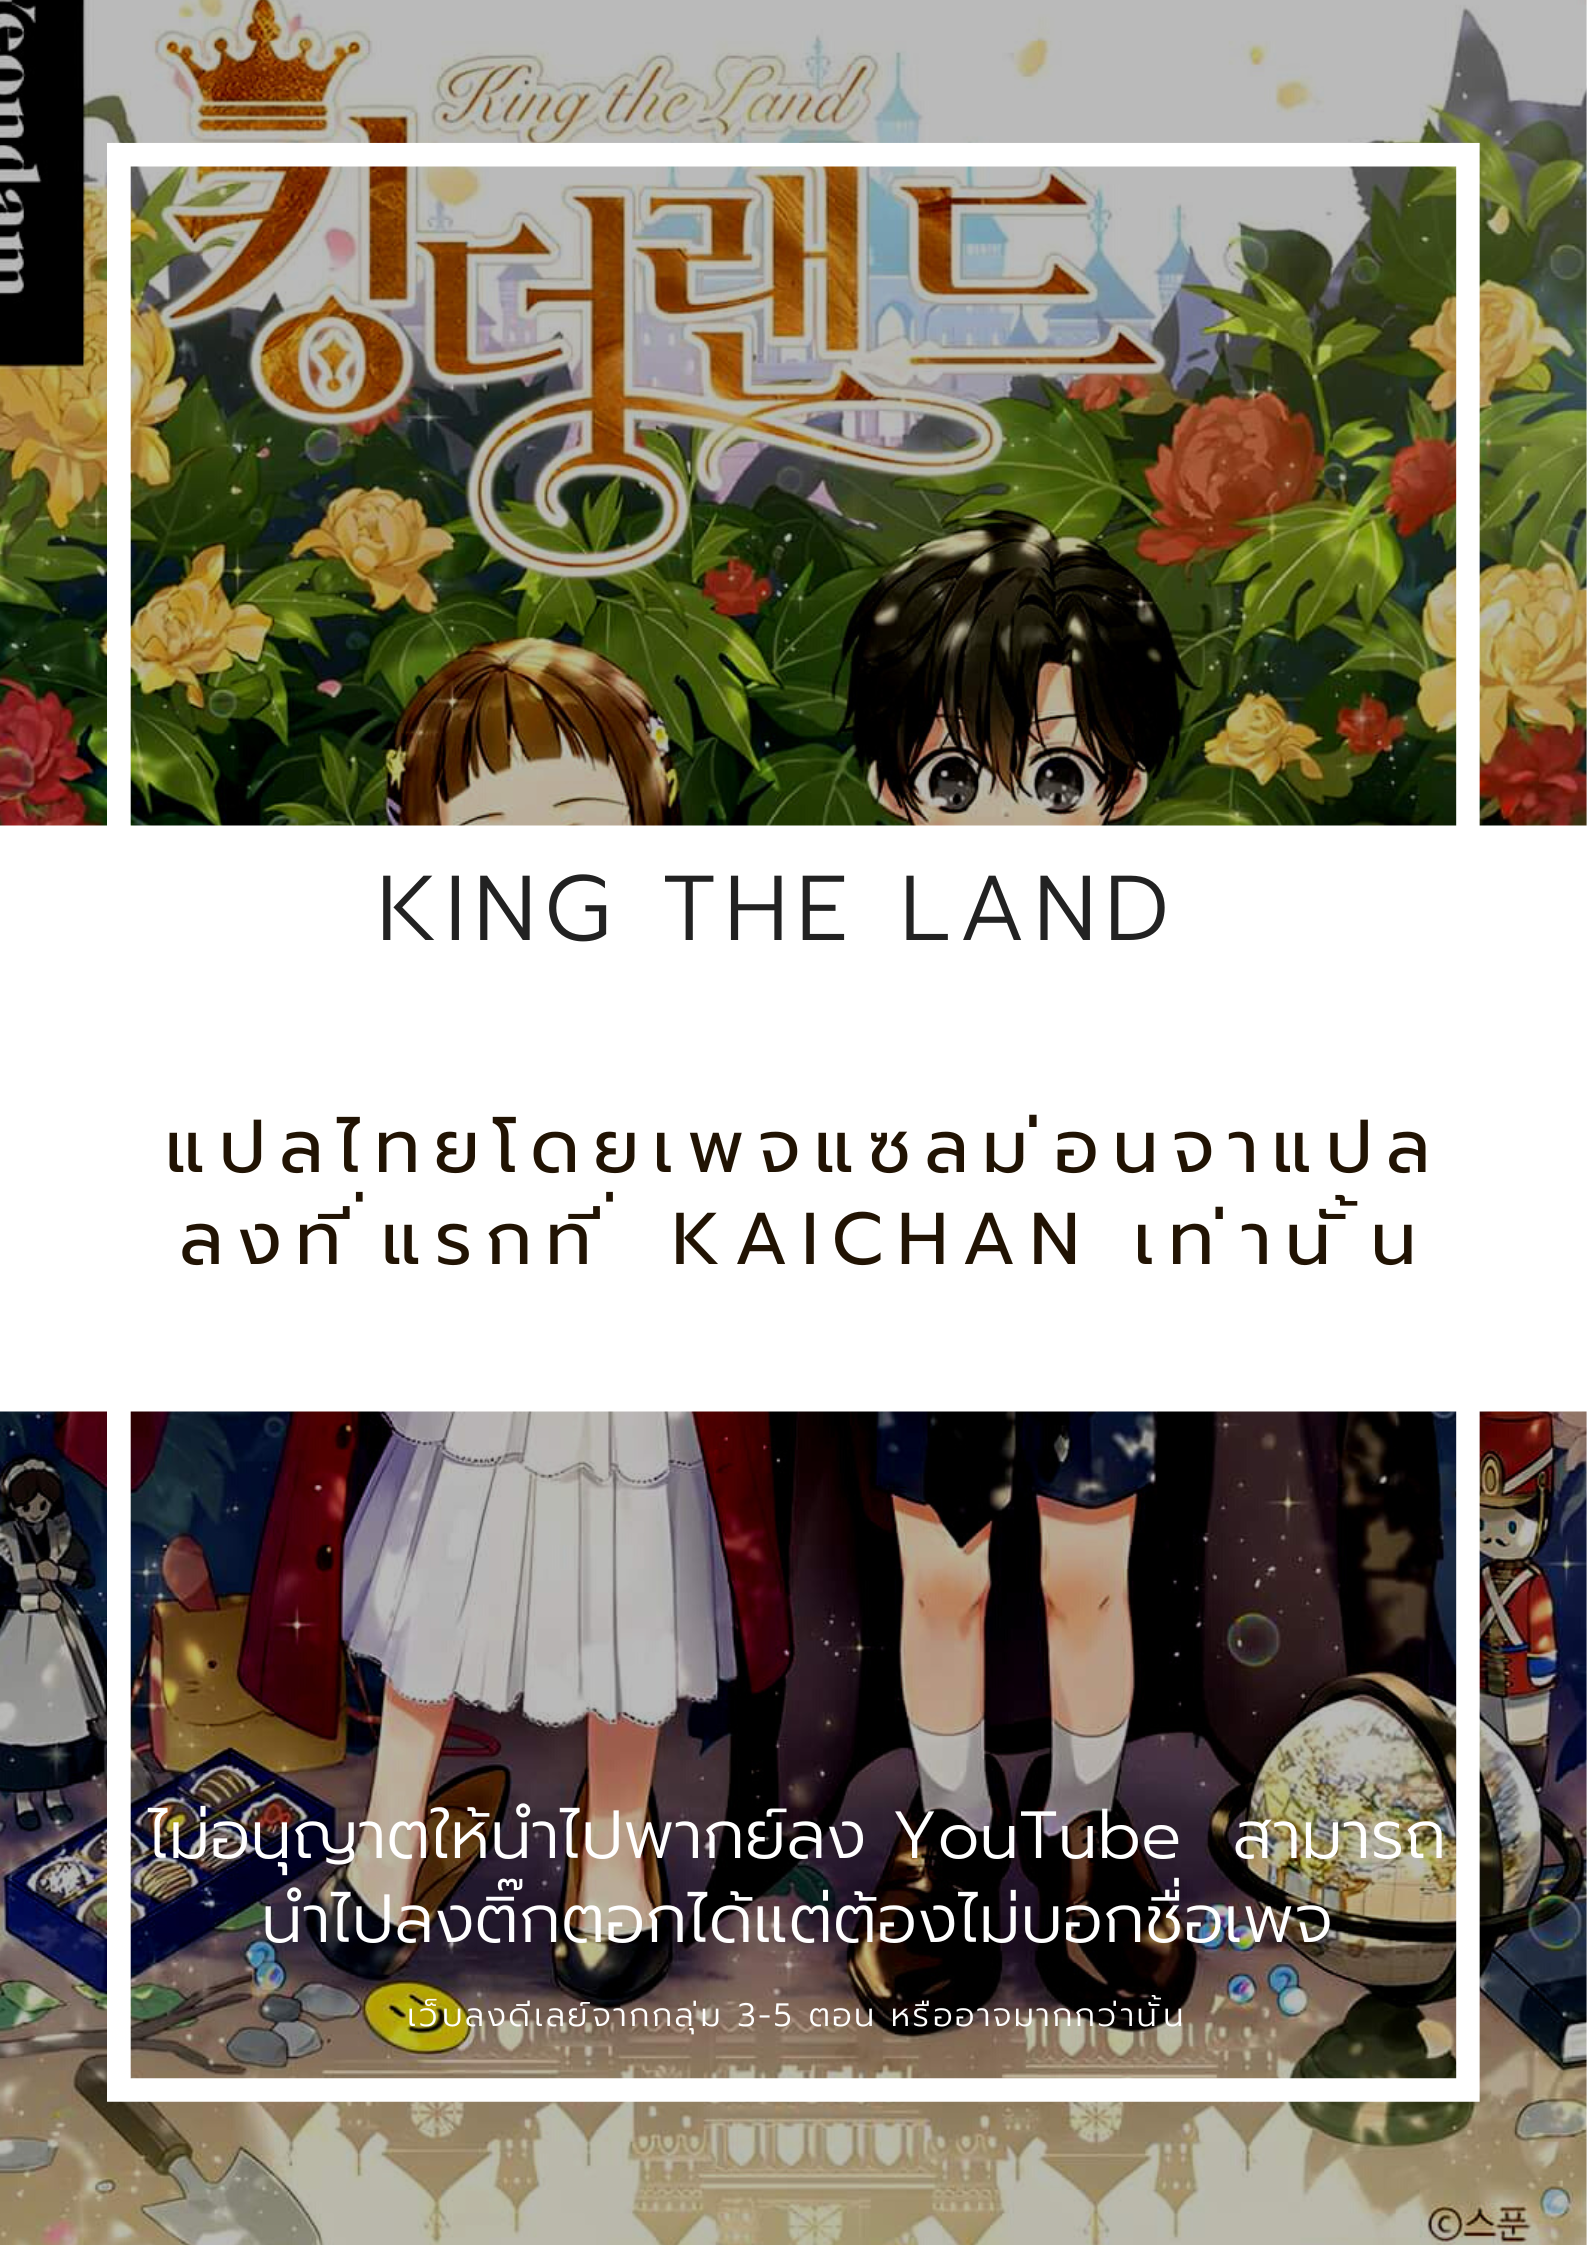 King the land ตอนที่ 4 (1)